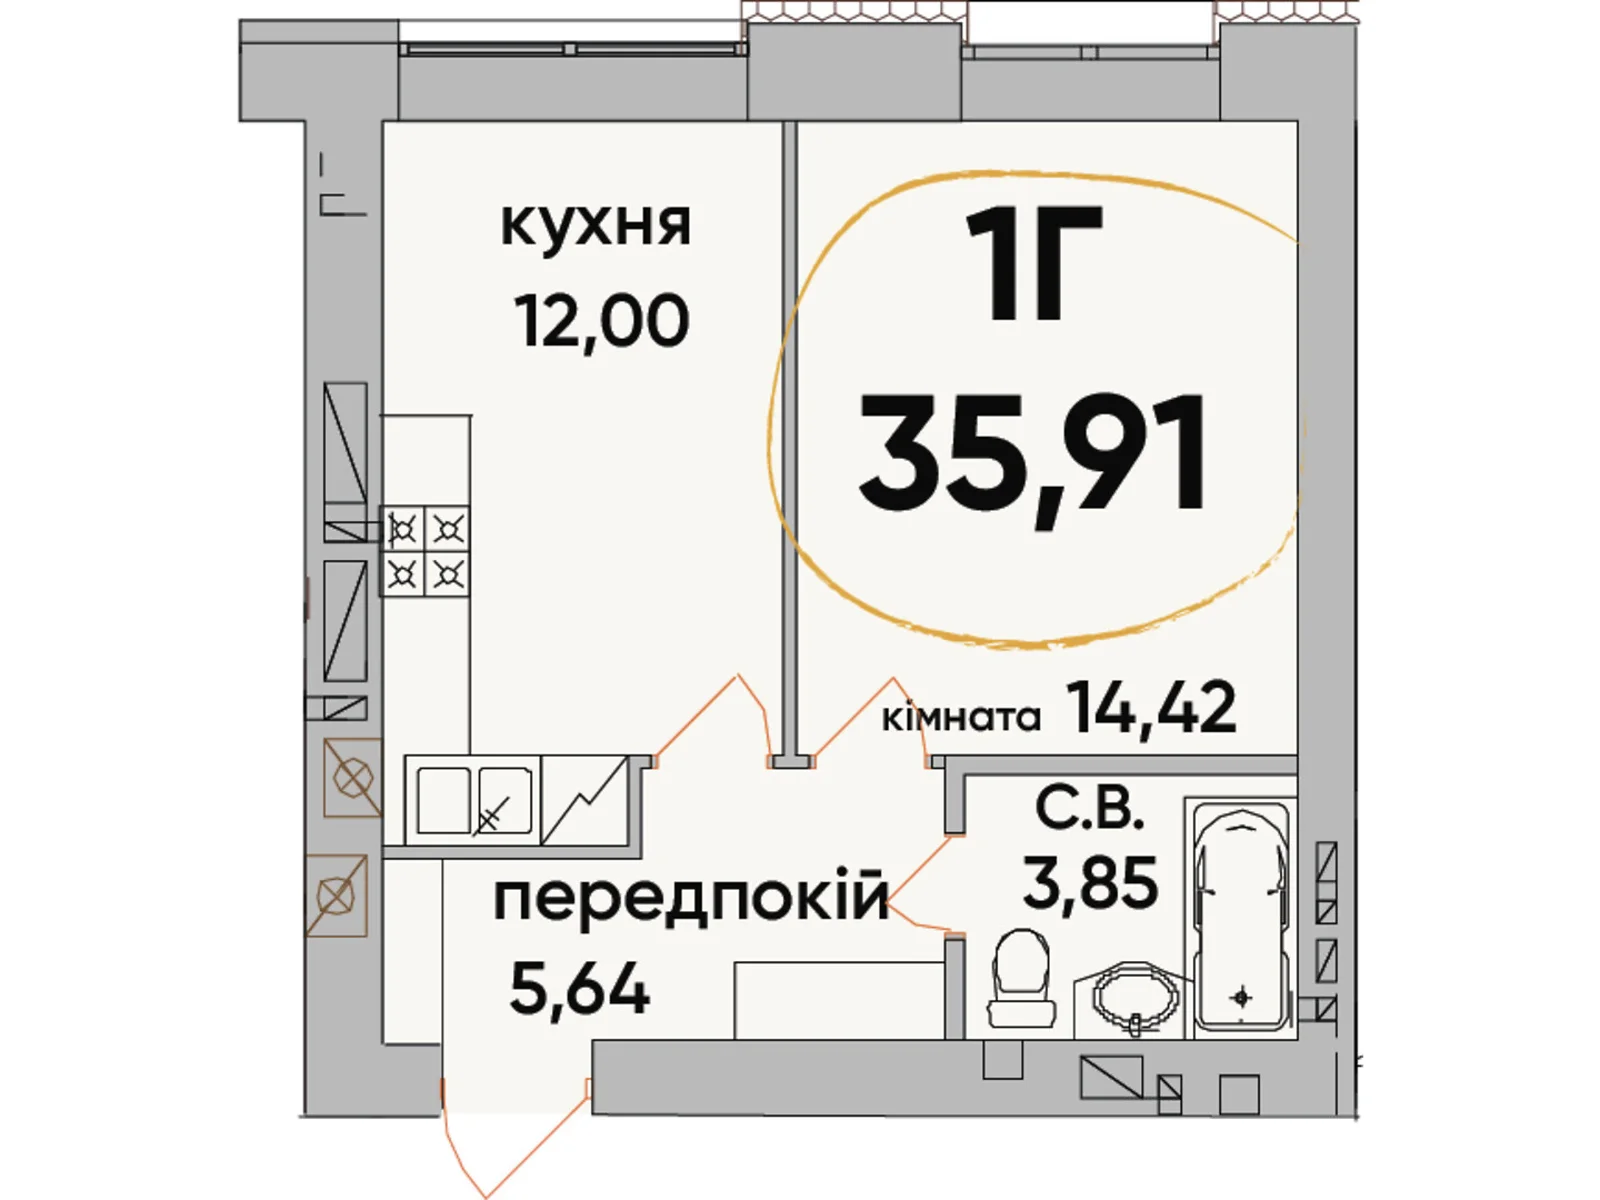 Продается 1-комнатная квартира 35.91 кв. м в Буче, ул. Ивана Кожедуба, 8 - фото 1